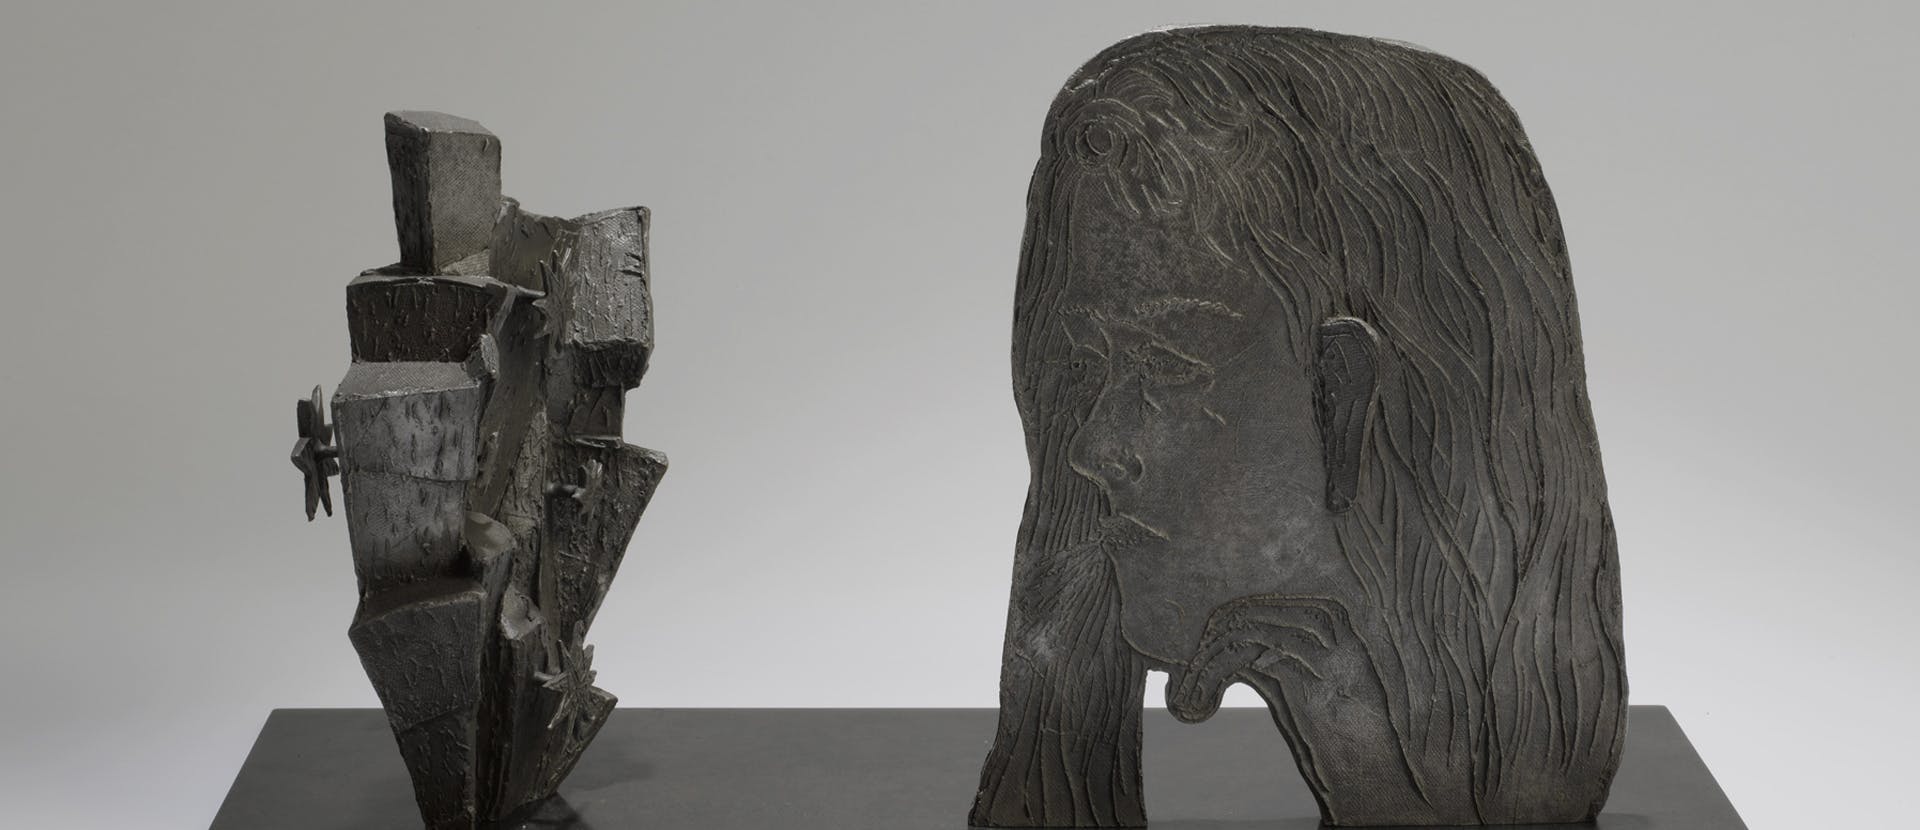 mammal wildlife animal elephant figurine art sculpture bronze archaeology wood